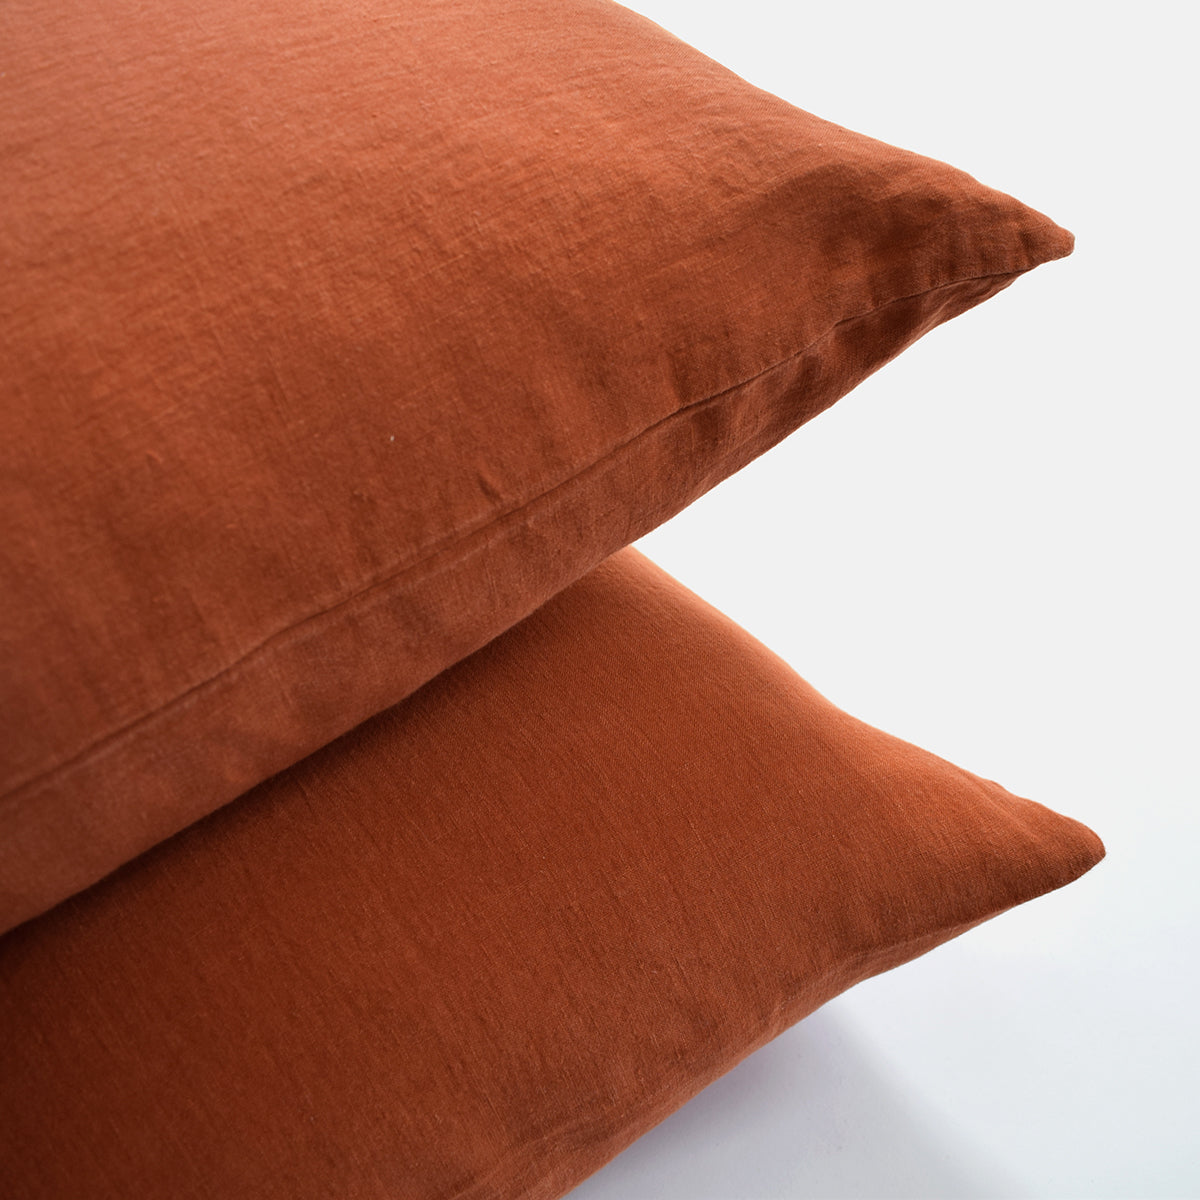 Linge Particulier Sienna Orange Standard Linen Pillowcase Sham for a colorful linen bedding look in burnt orange - Collyer's Mansion